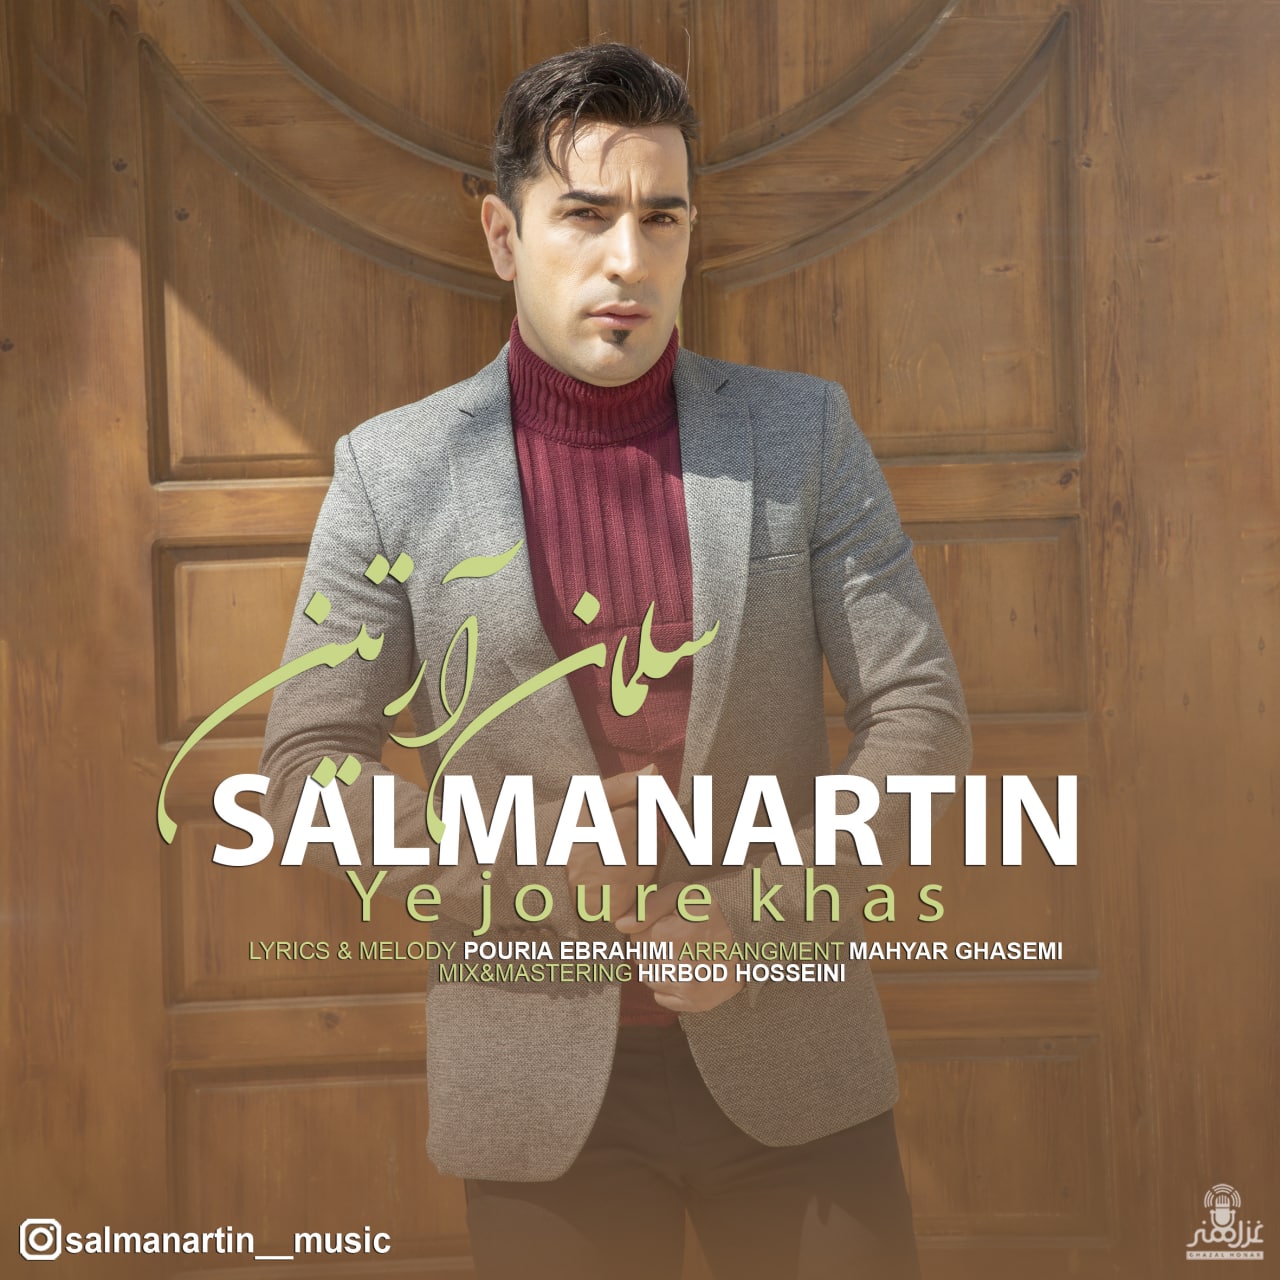 Salman Artin - Ye Joure Khas